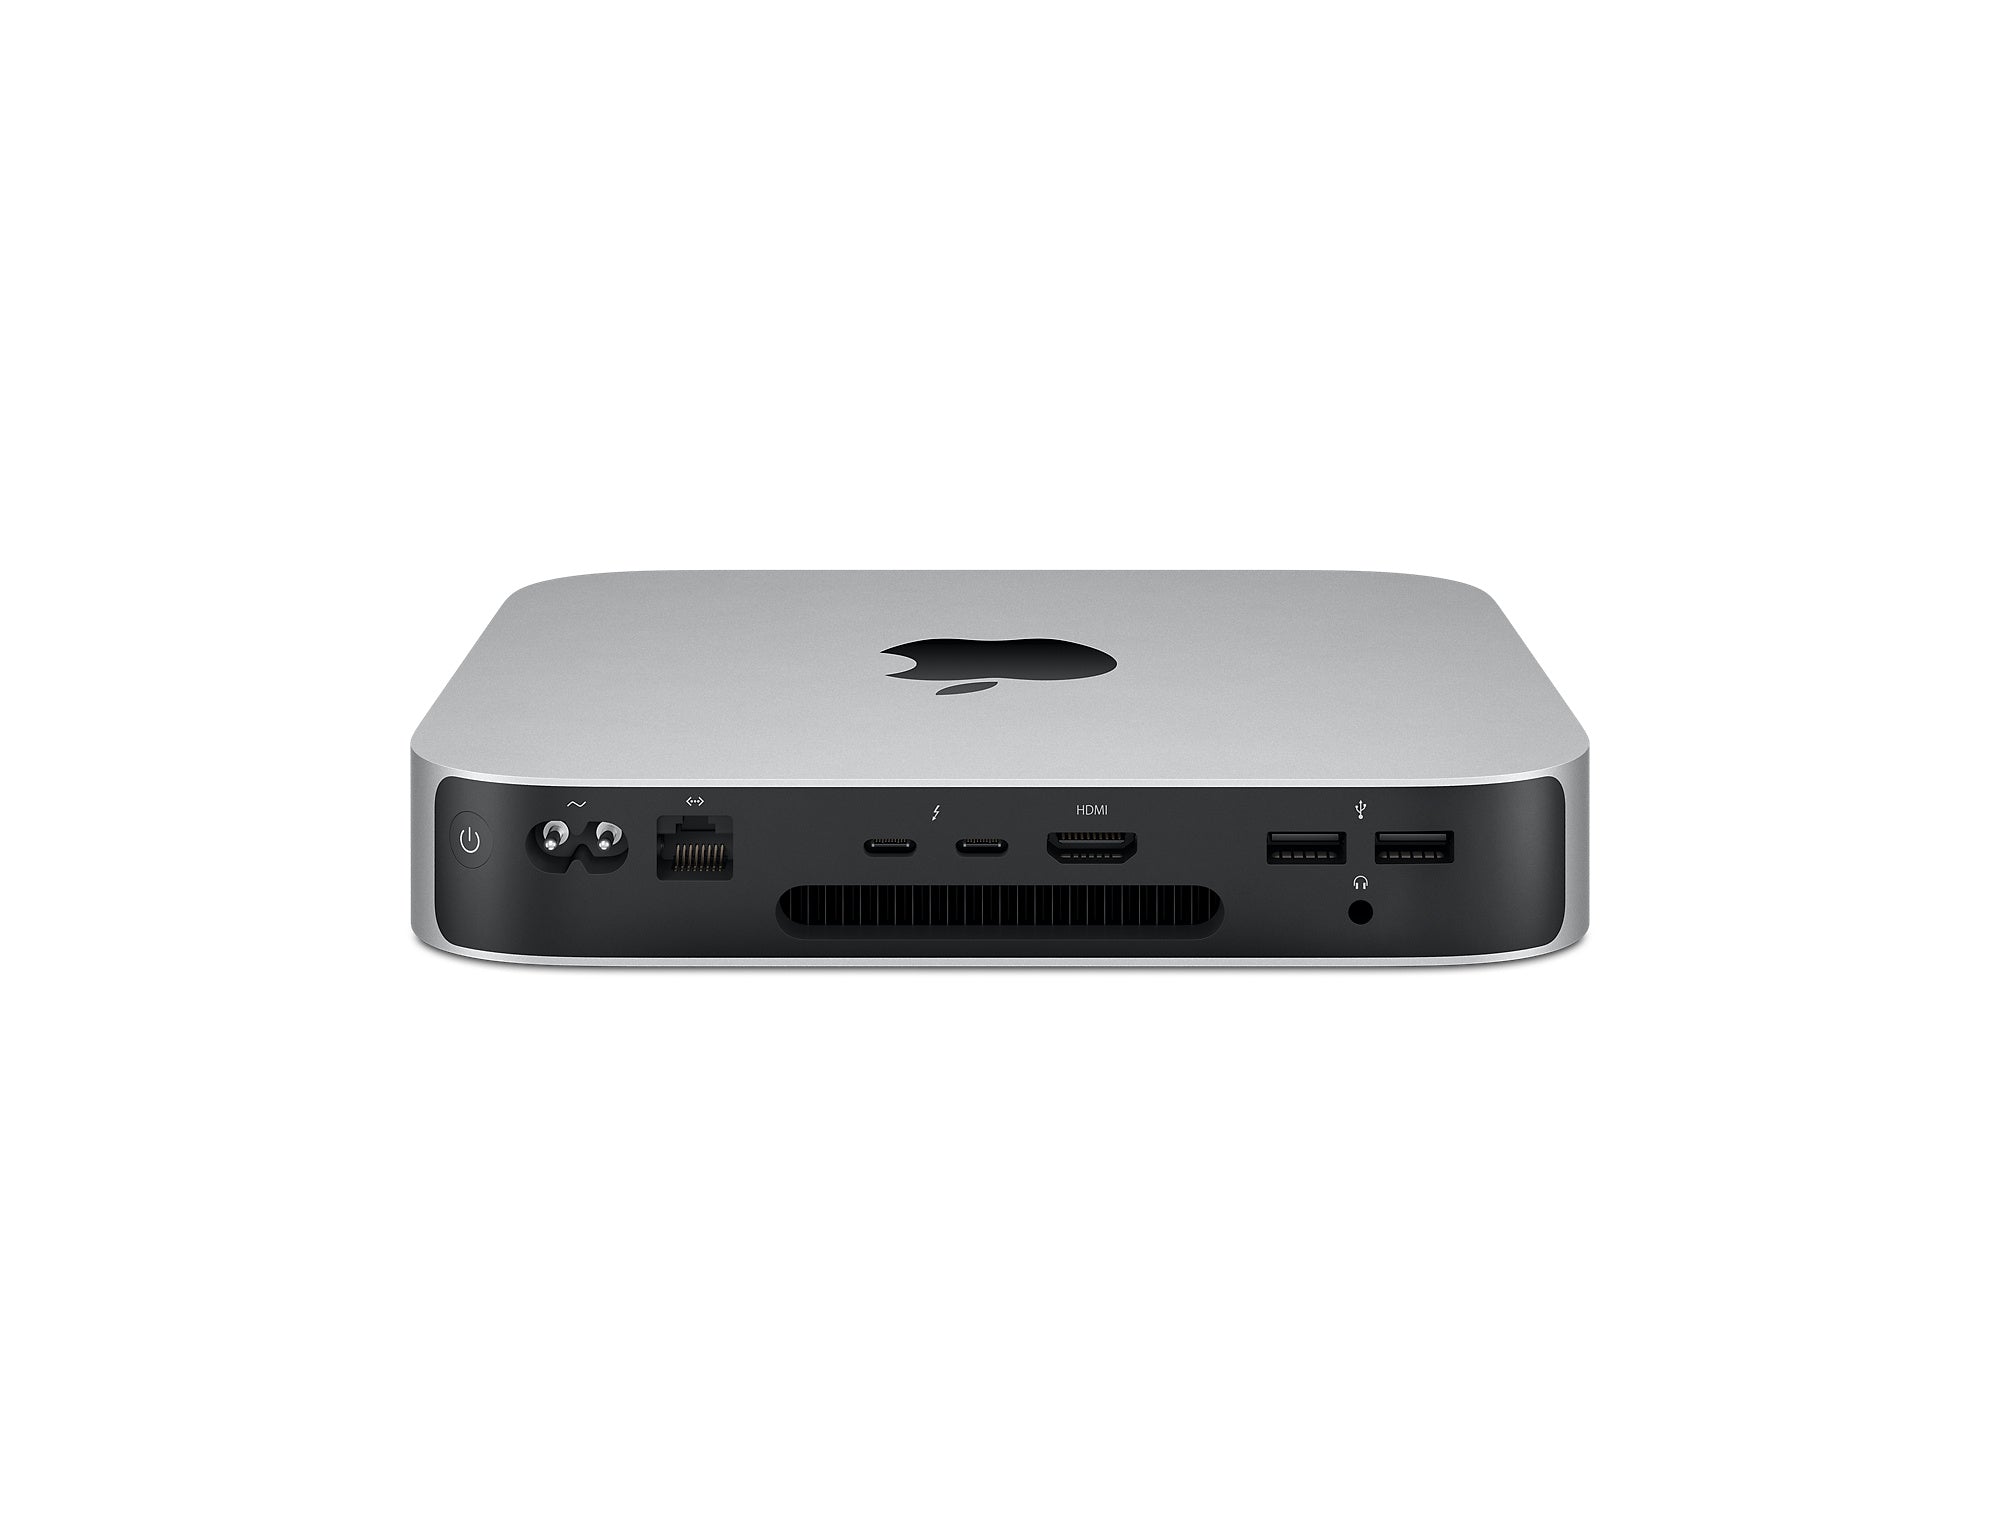 Mac mini: Apple M1 chip with 8 core CPU and 8 core GPU, 256GB SSD - Brand New Open Box